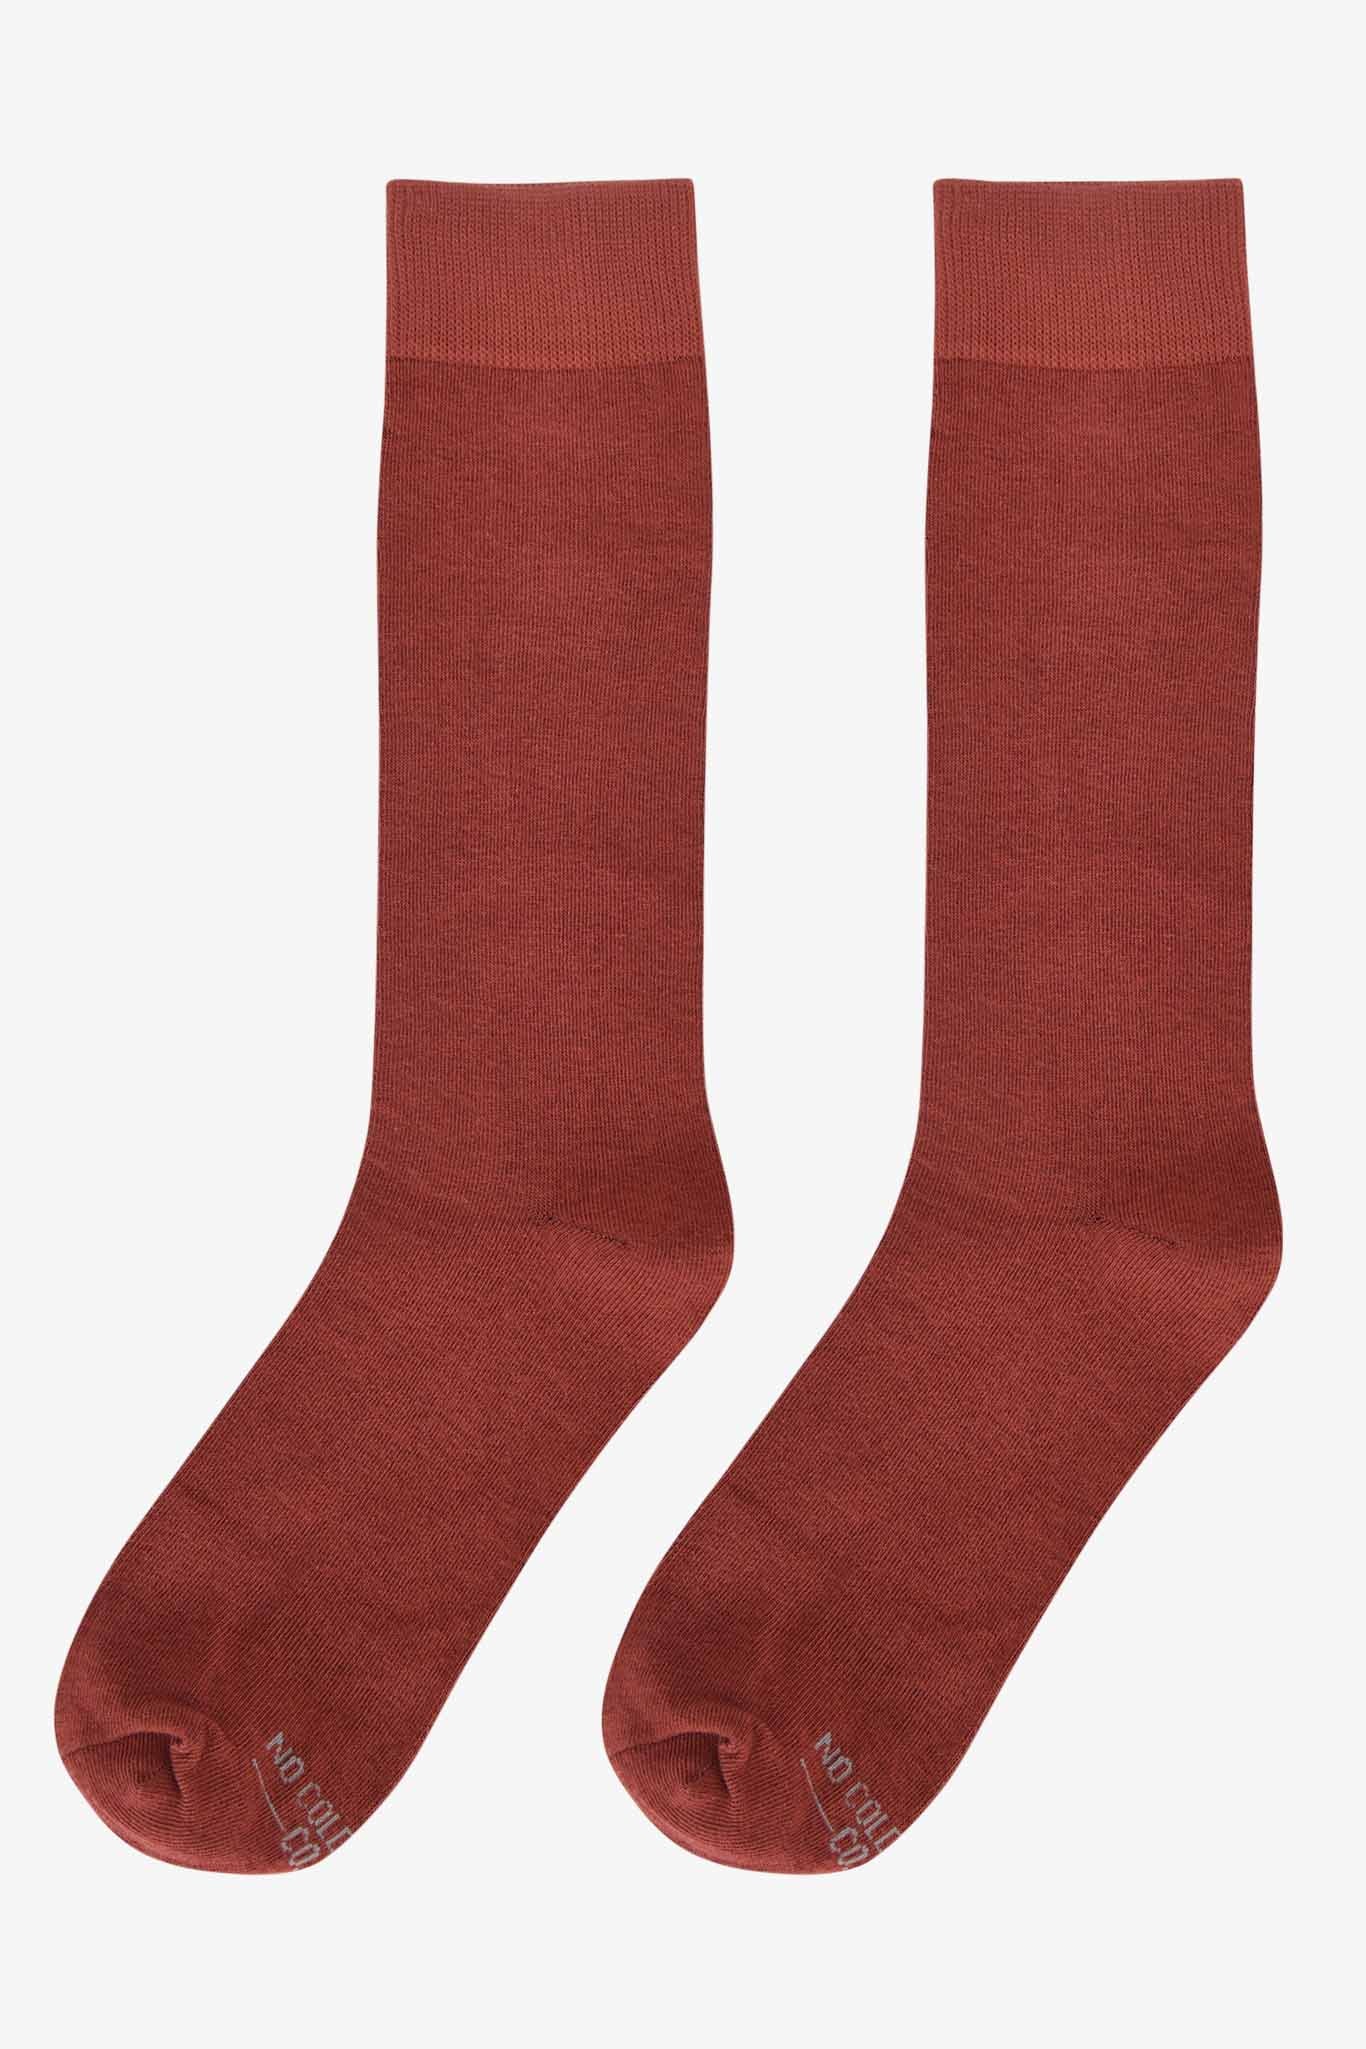 Solid Groomsmen Socks By No Cold Feet - Burnt Orange